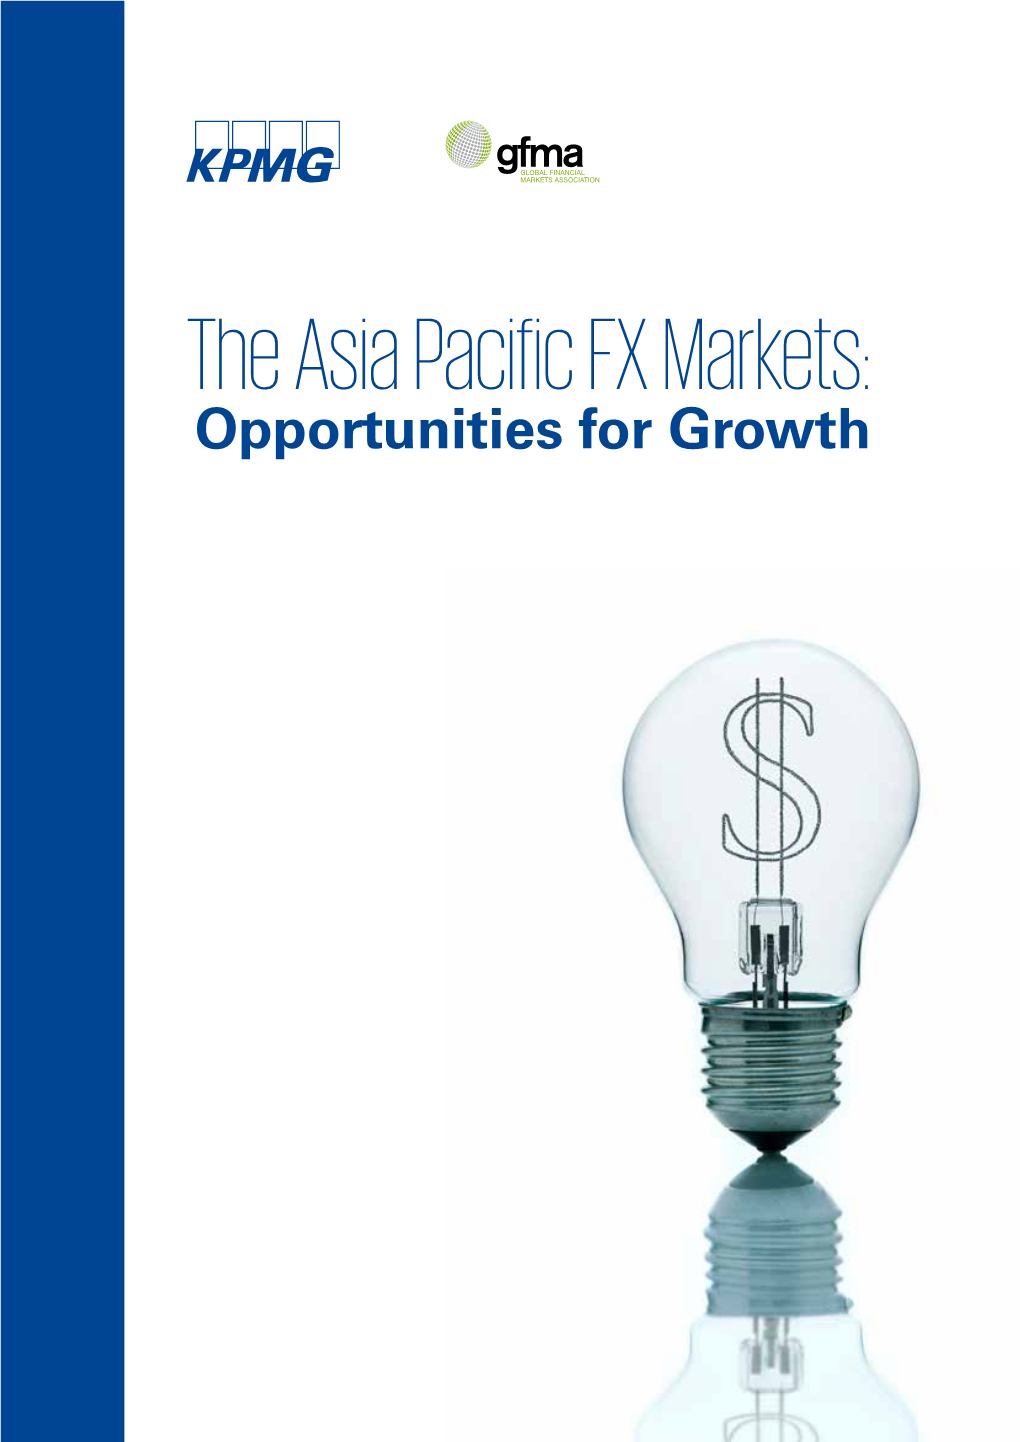 The Asia Pacific FX Markets